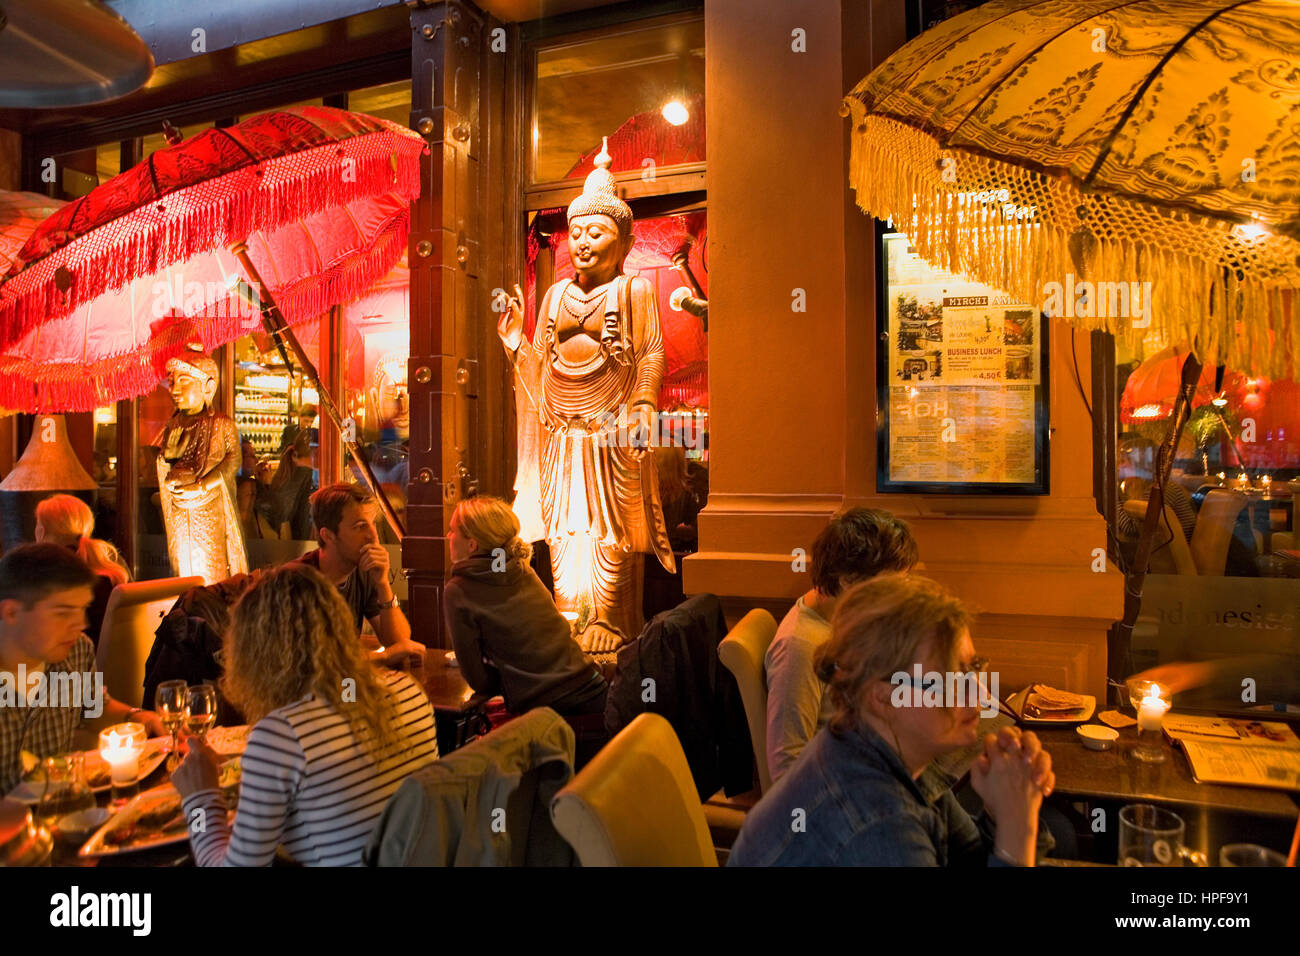 Amrit. Indian restaurant. Oranienburgerstrasse, 50.Berlin. Germany Stock Photo